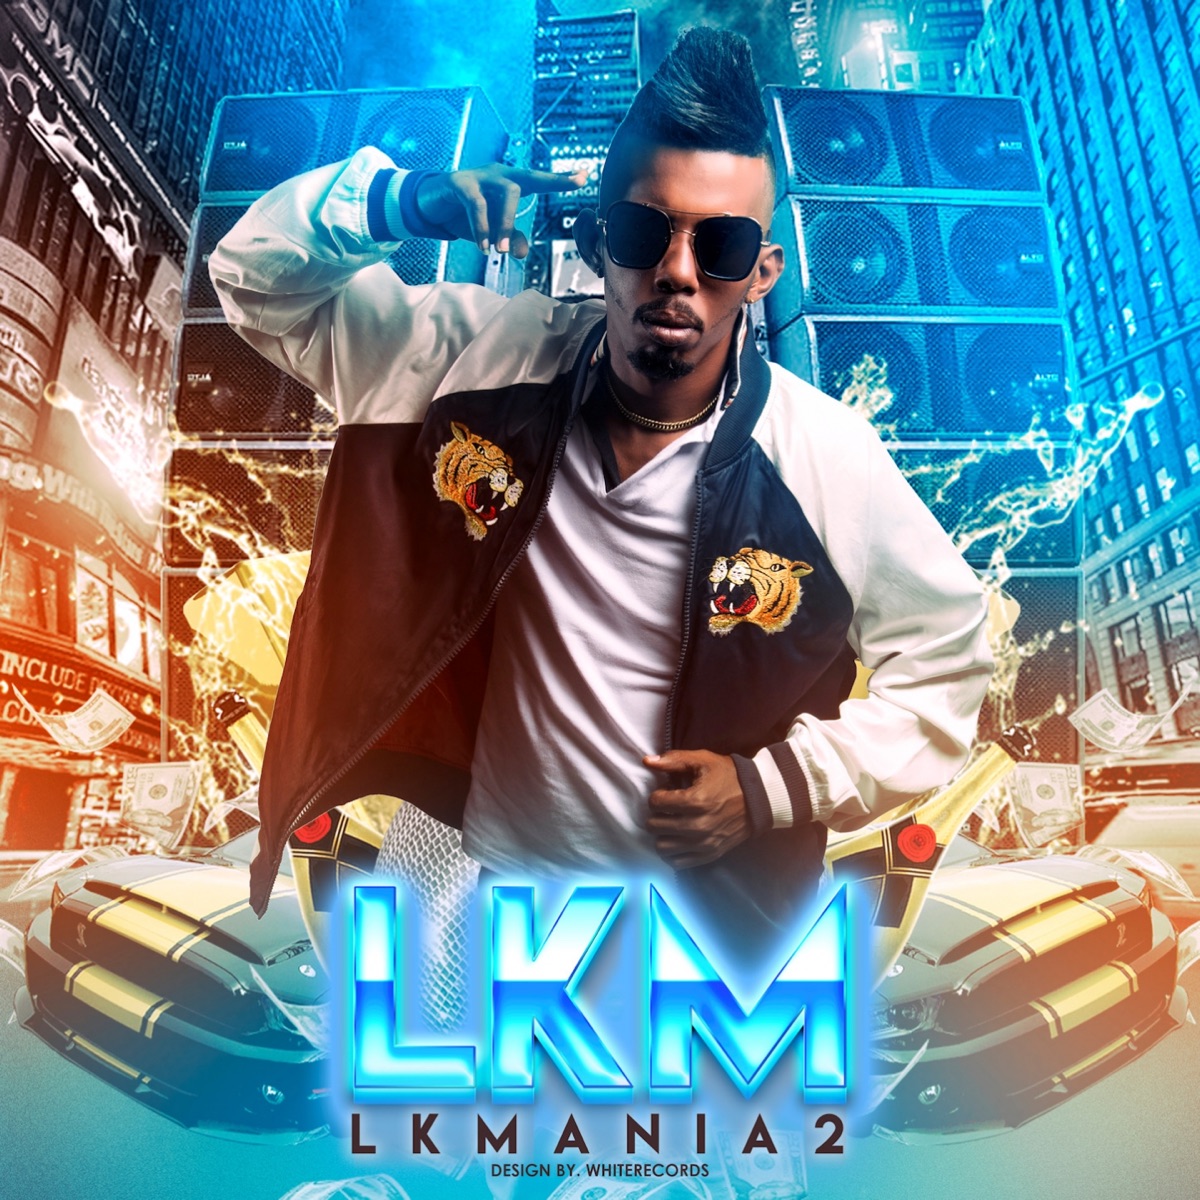 LKMania 2 - Album by L.K.M - Apple Music